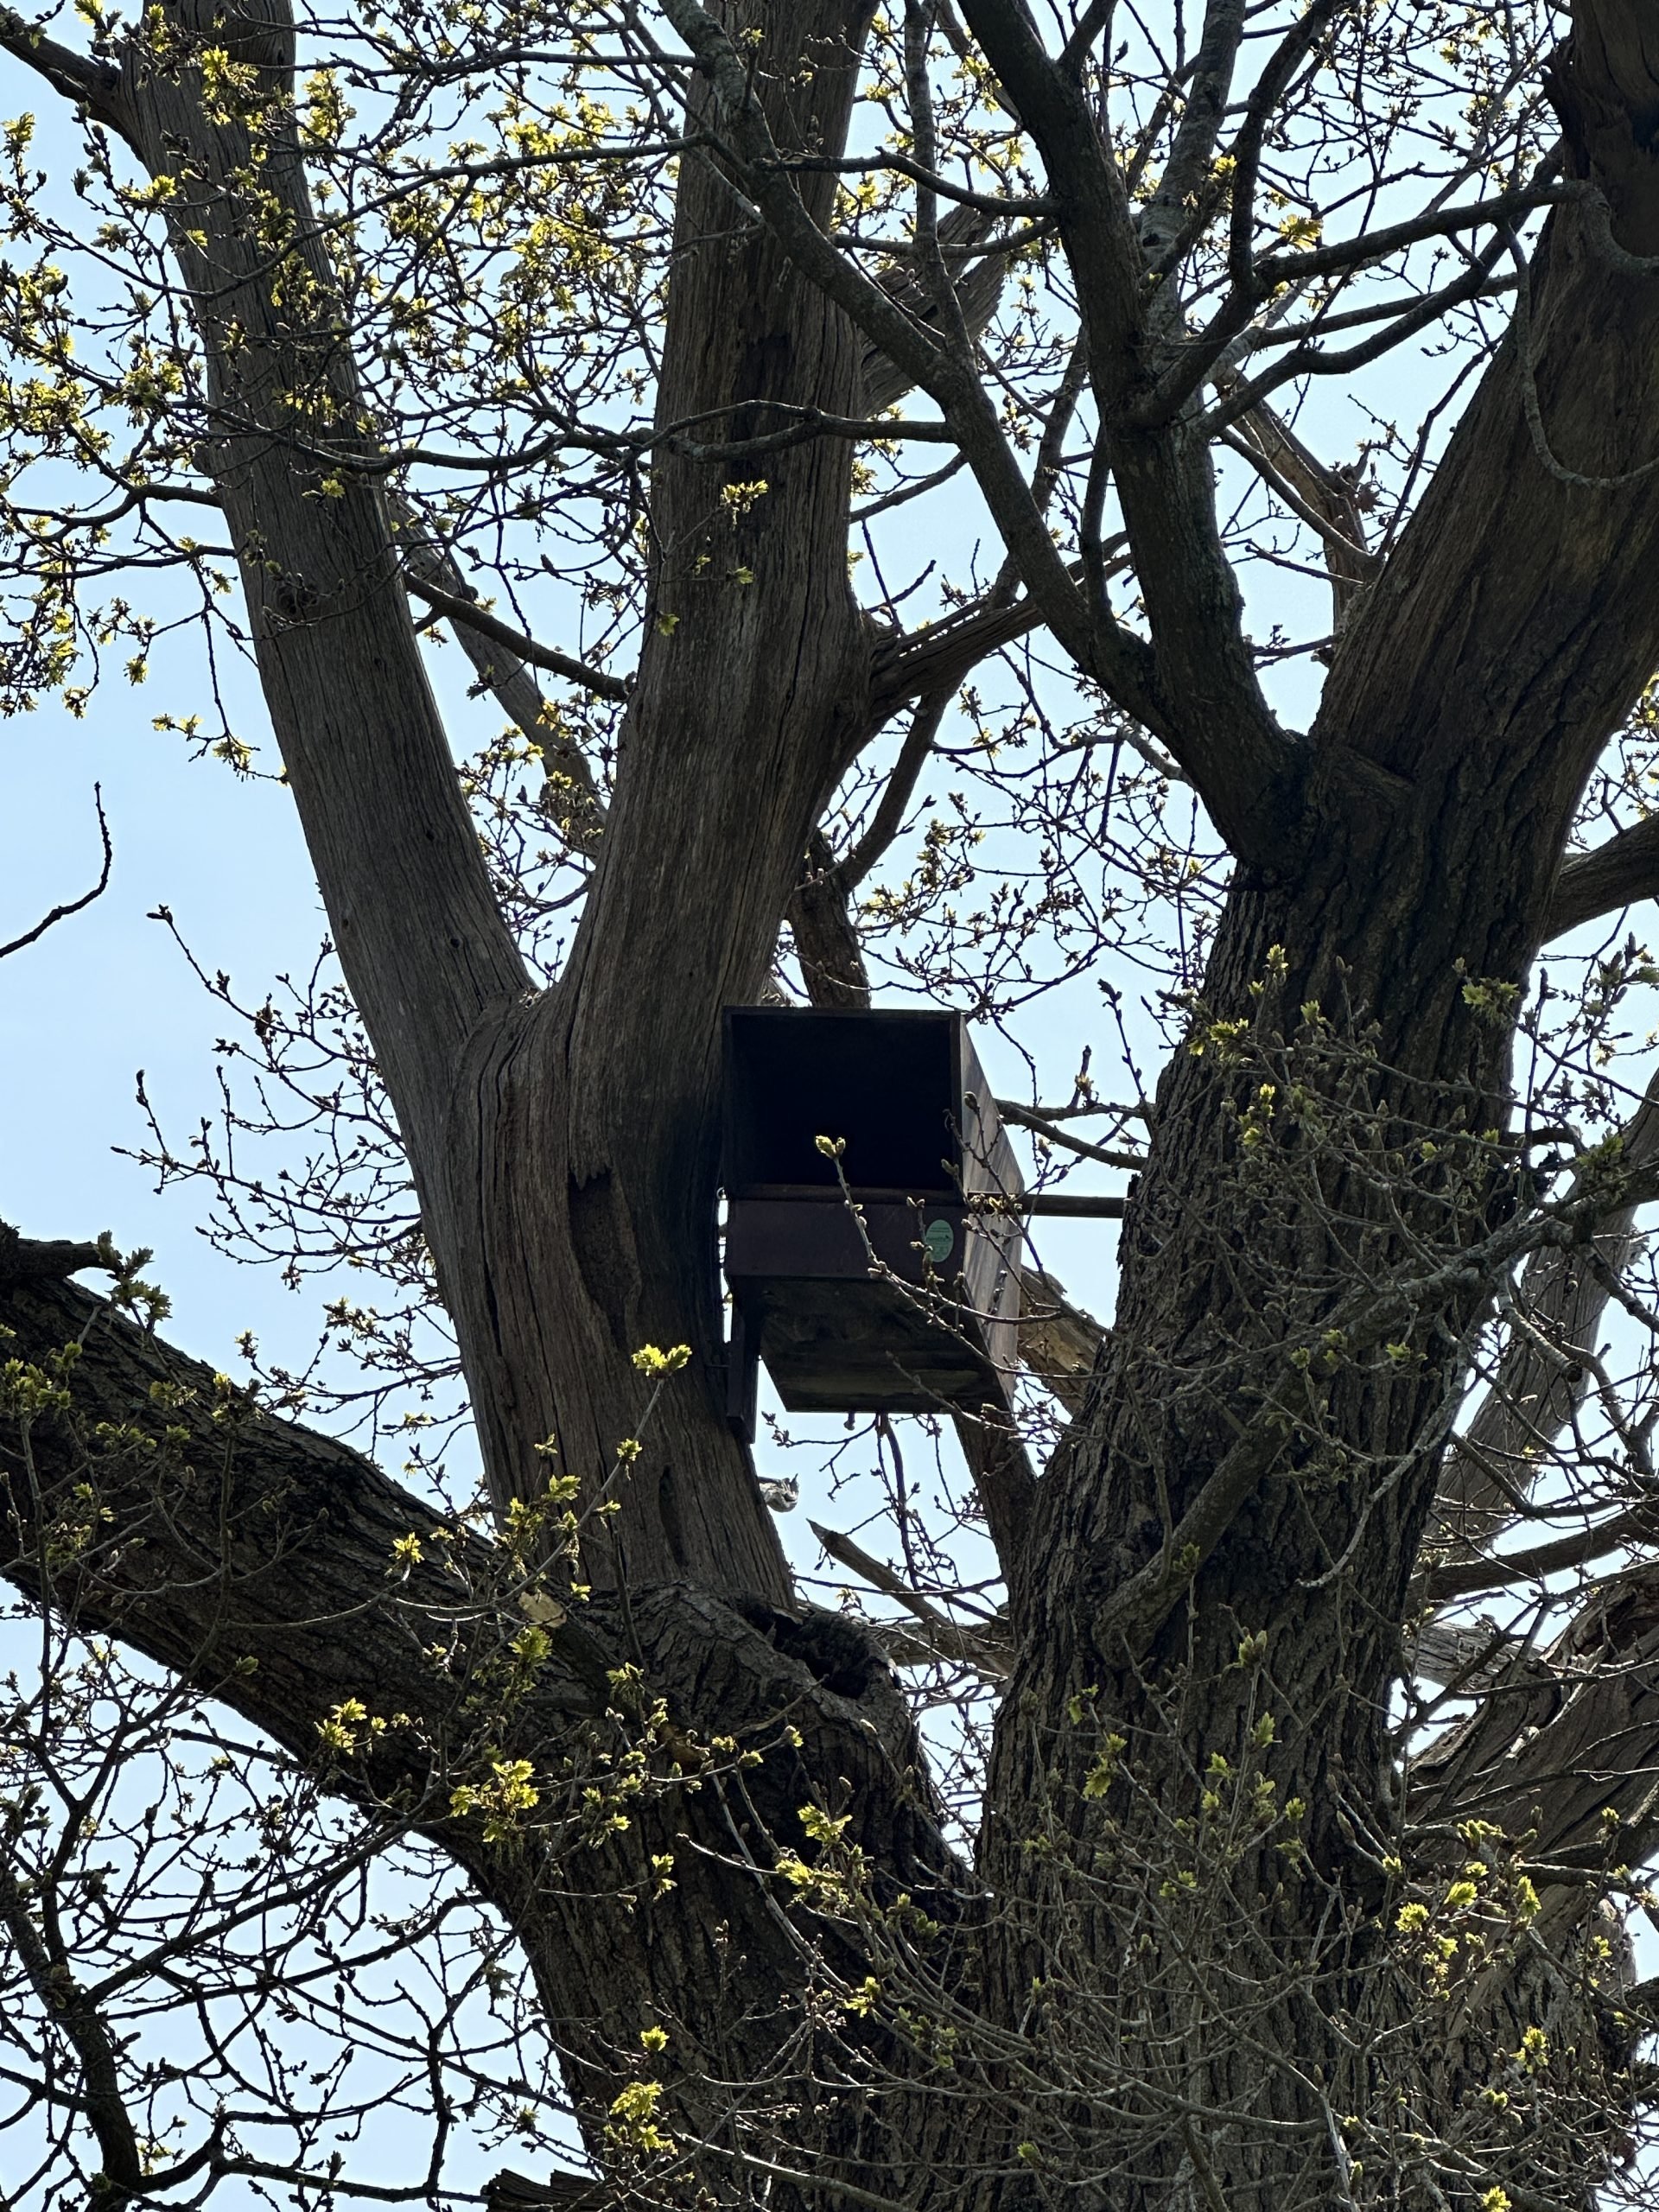 wildlife box in tree